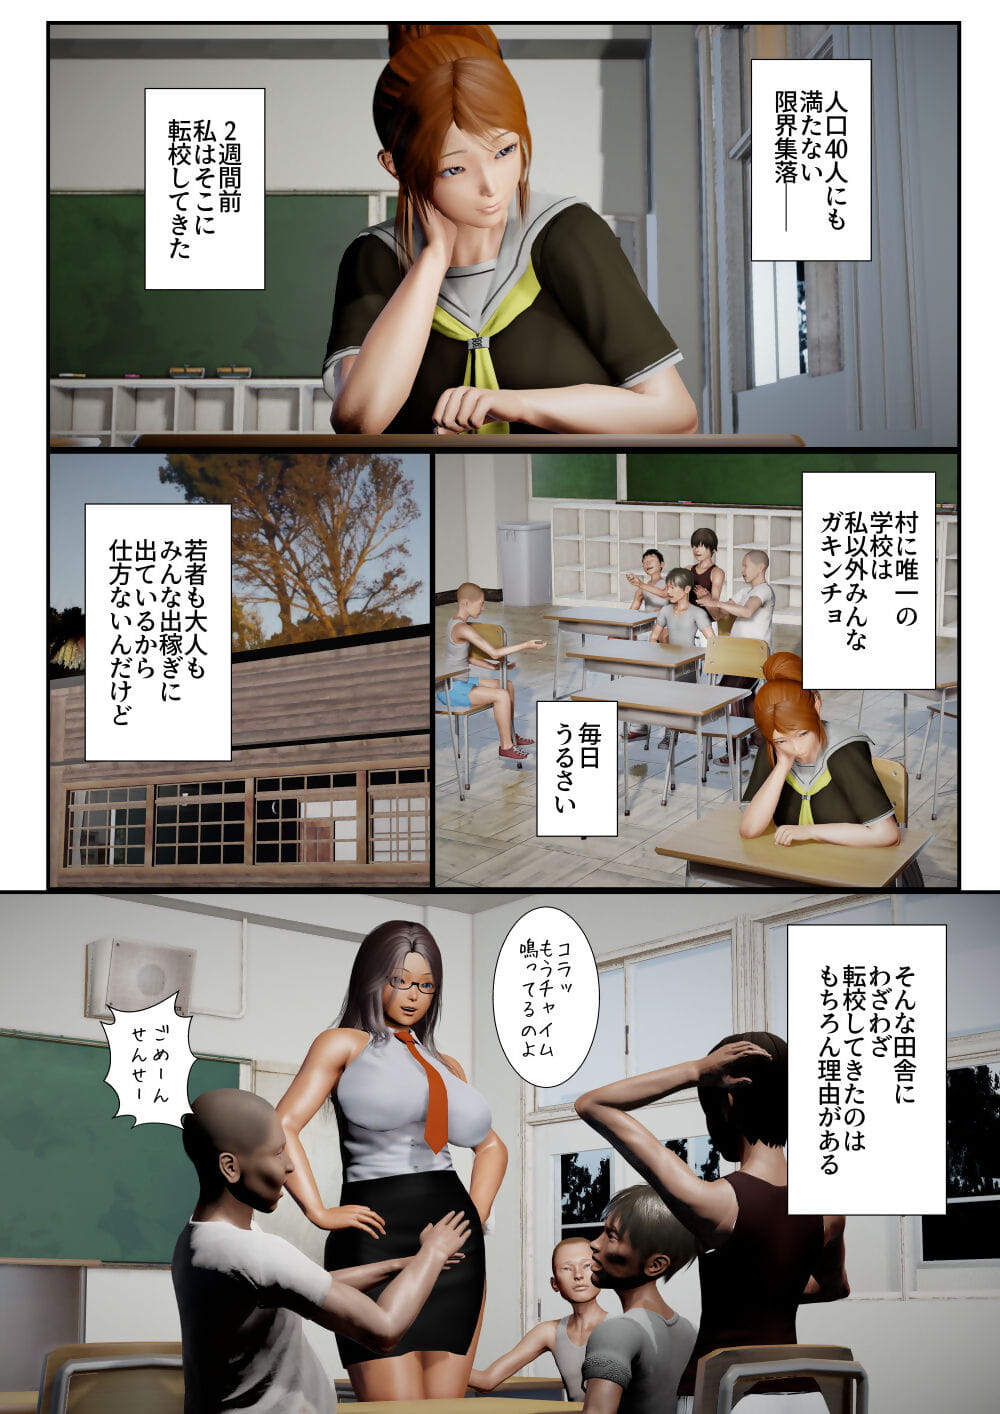 goriramu Touma kenshi shiriizu Démon swordsman série PARTIE 3 page 1